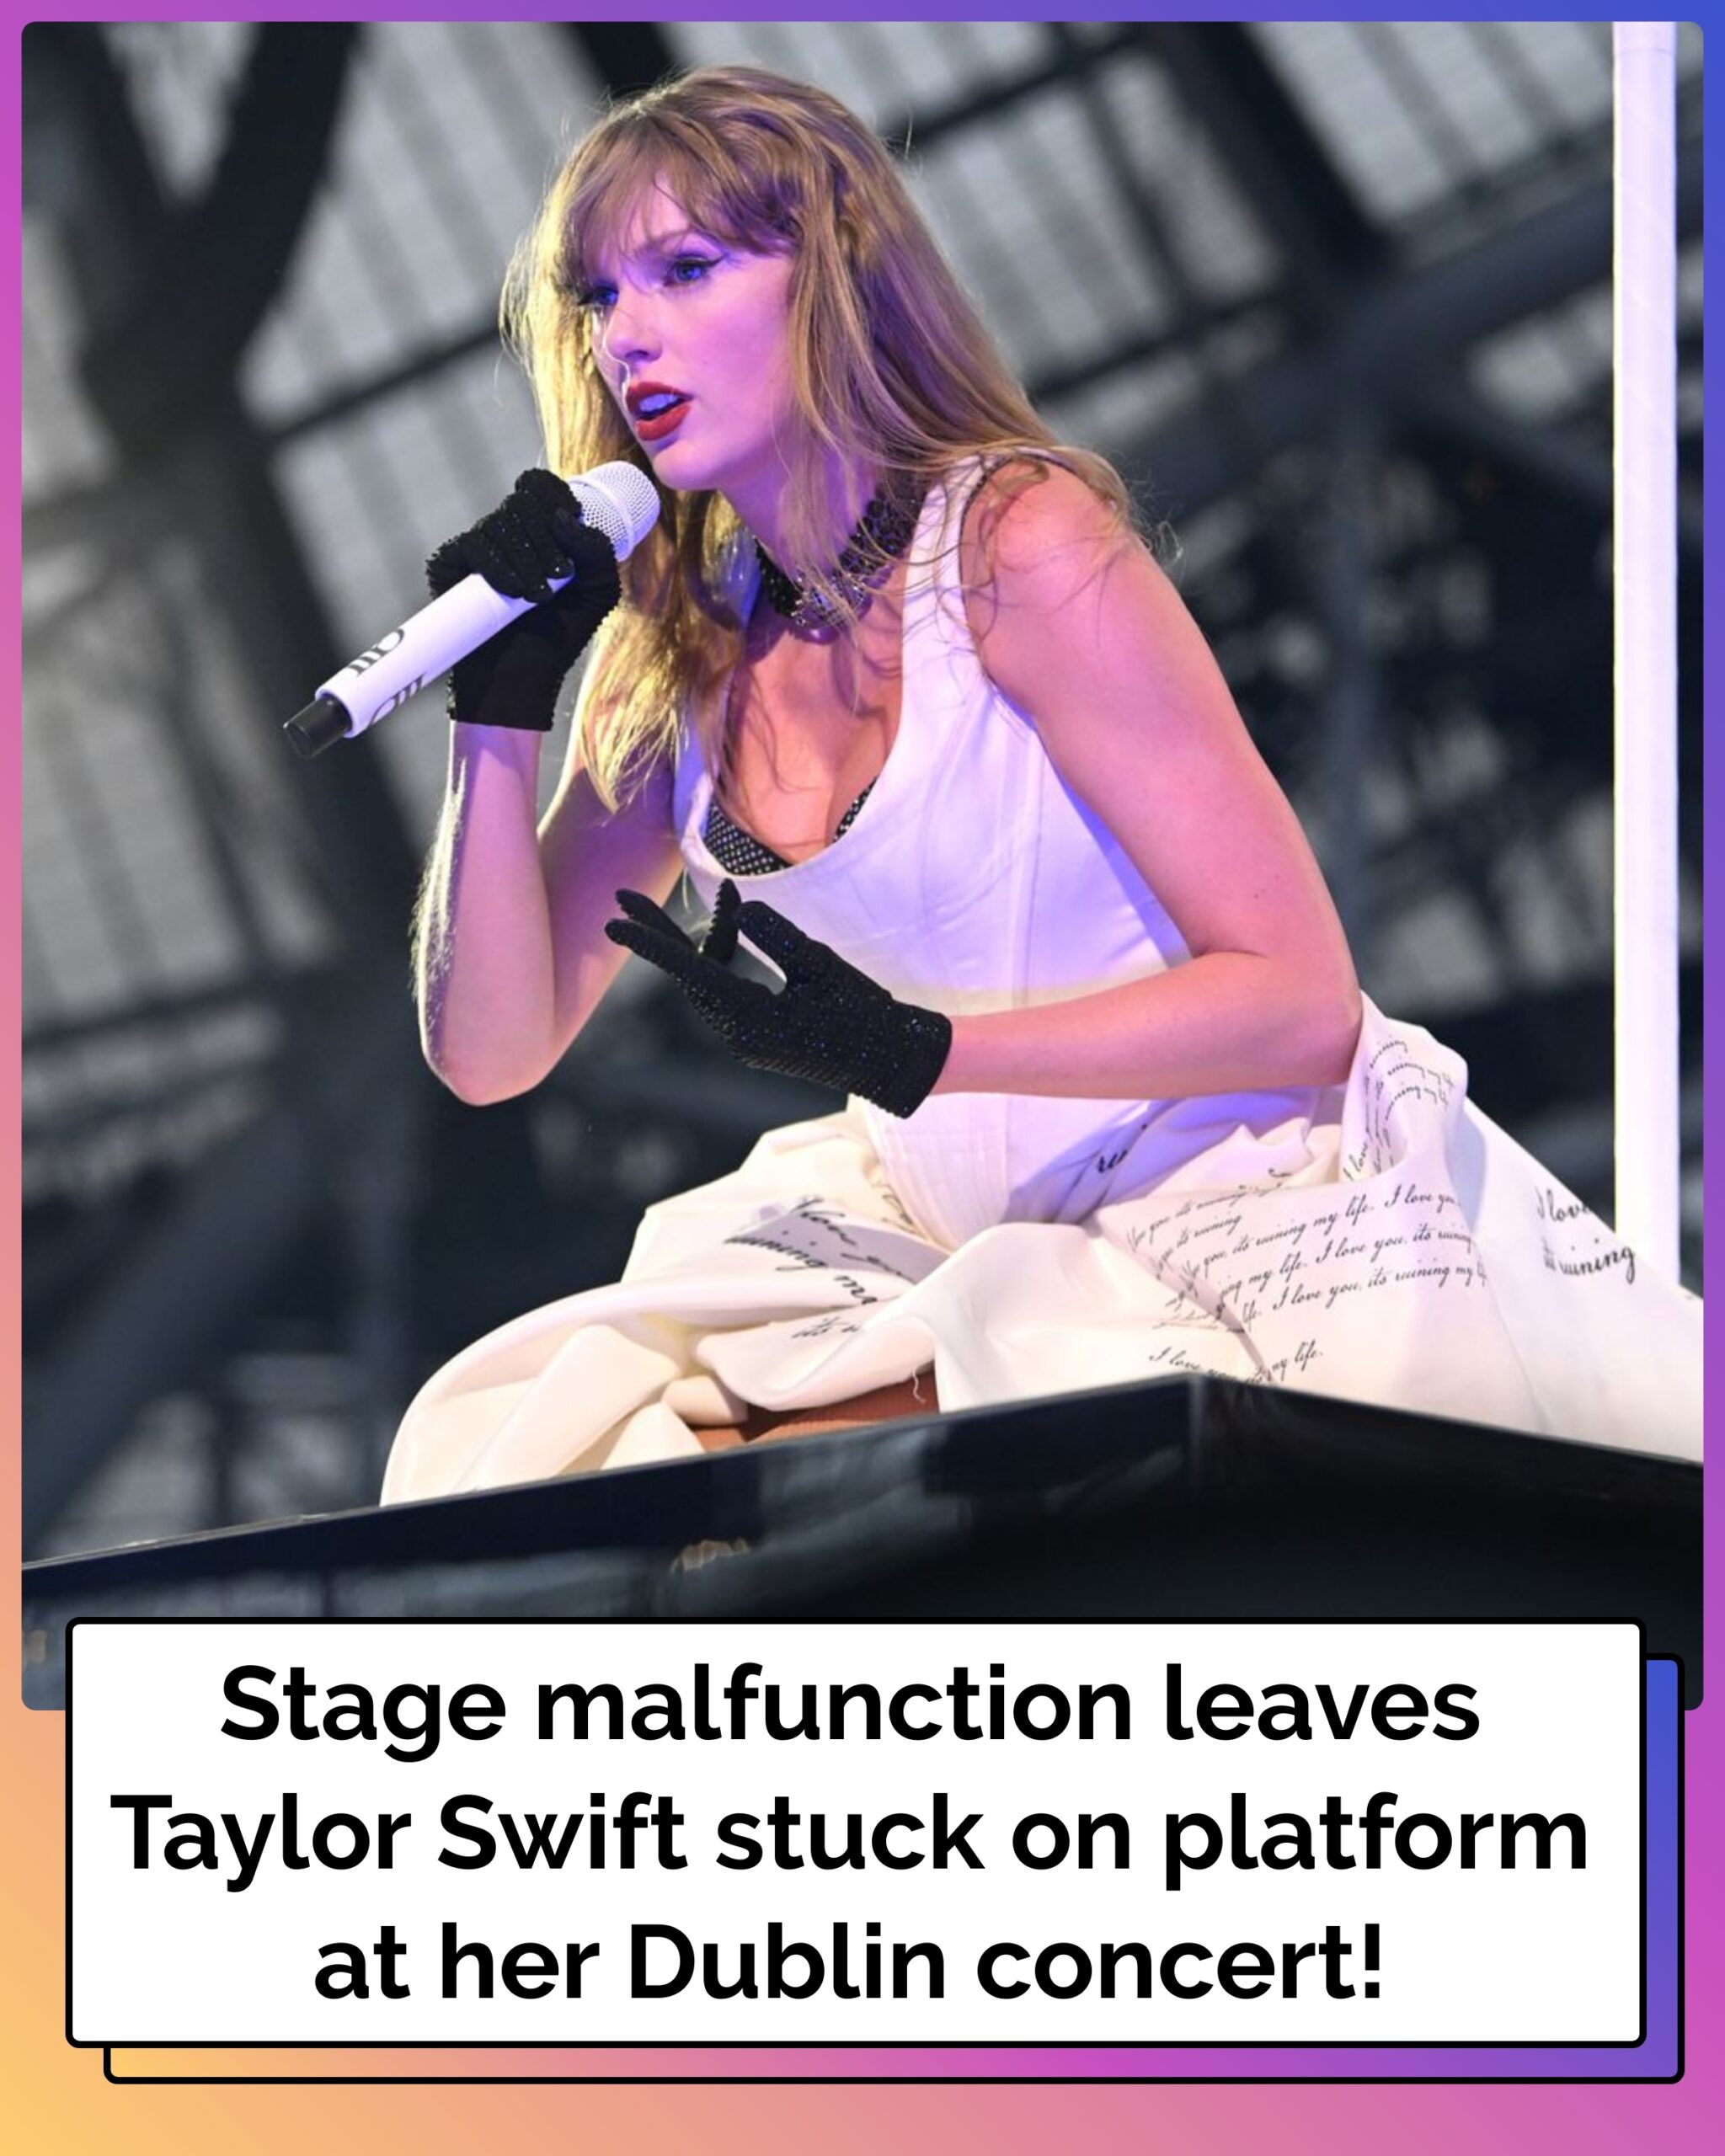 Taylor Swift Gets Stuck on Platform After Stage Malfunction During Dublin Concert